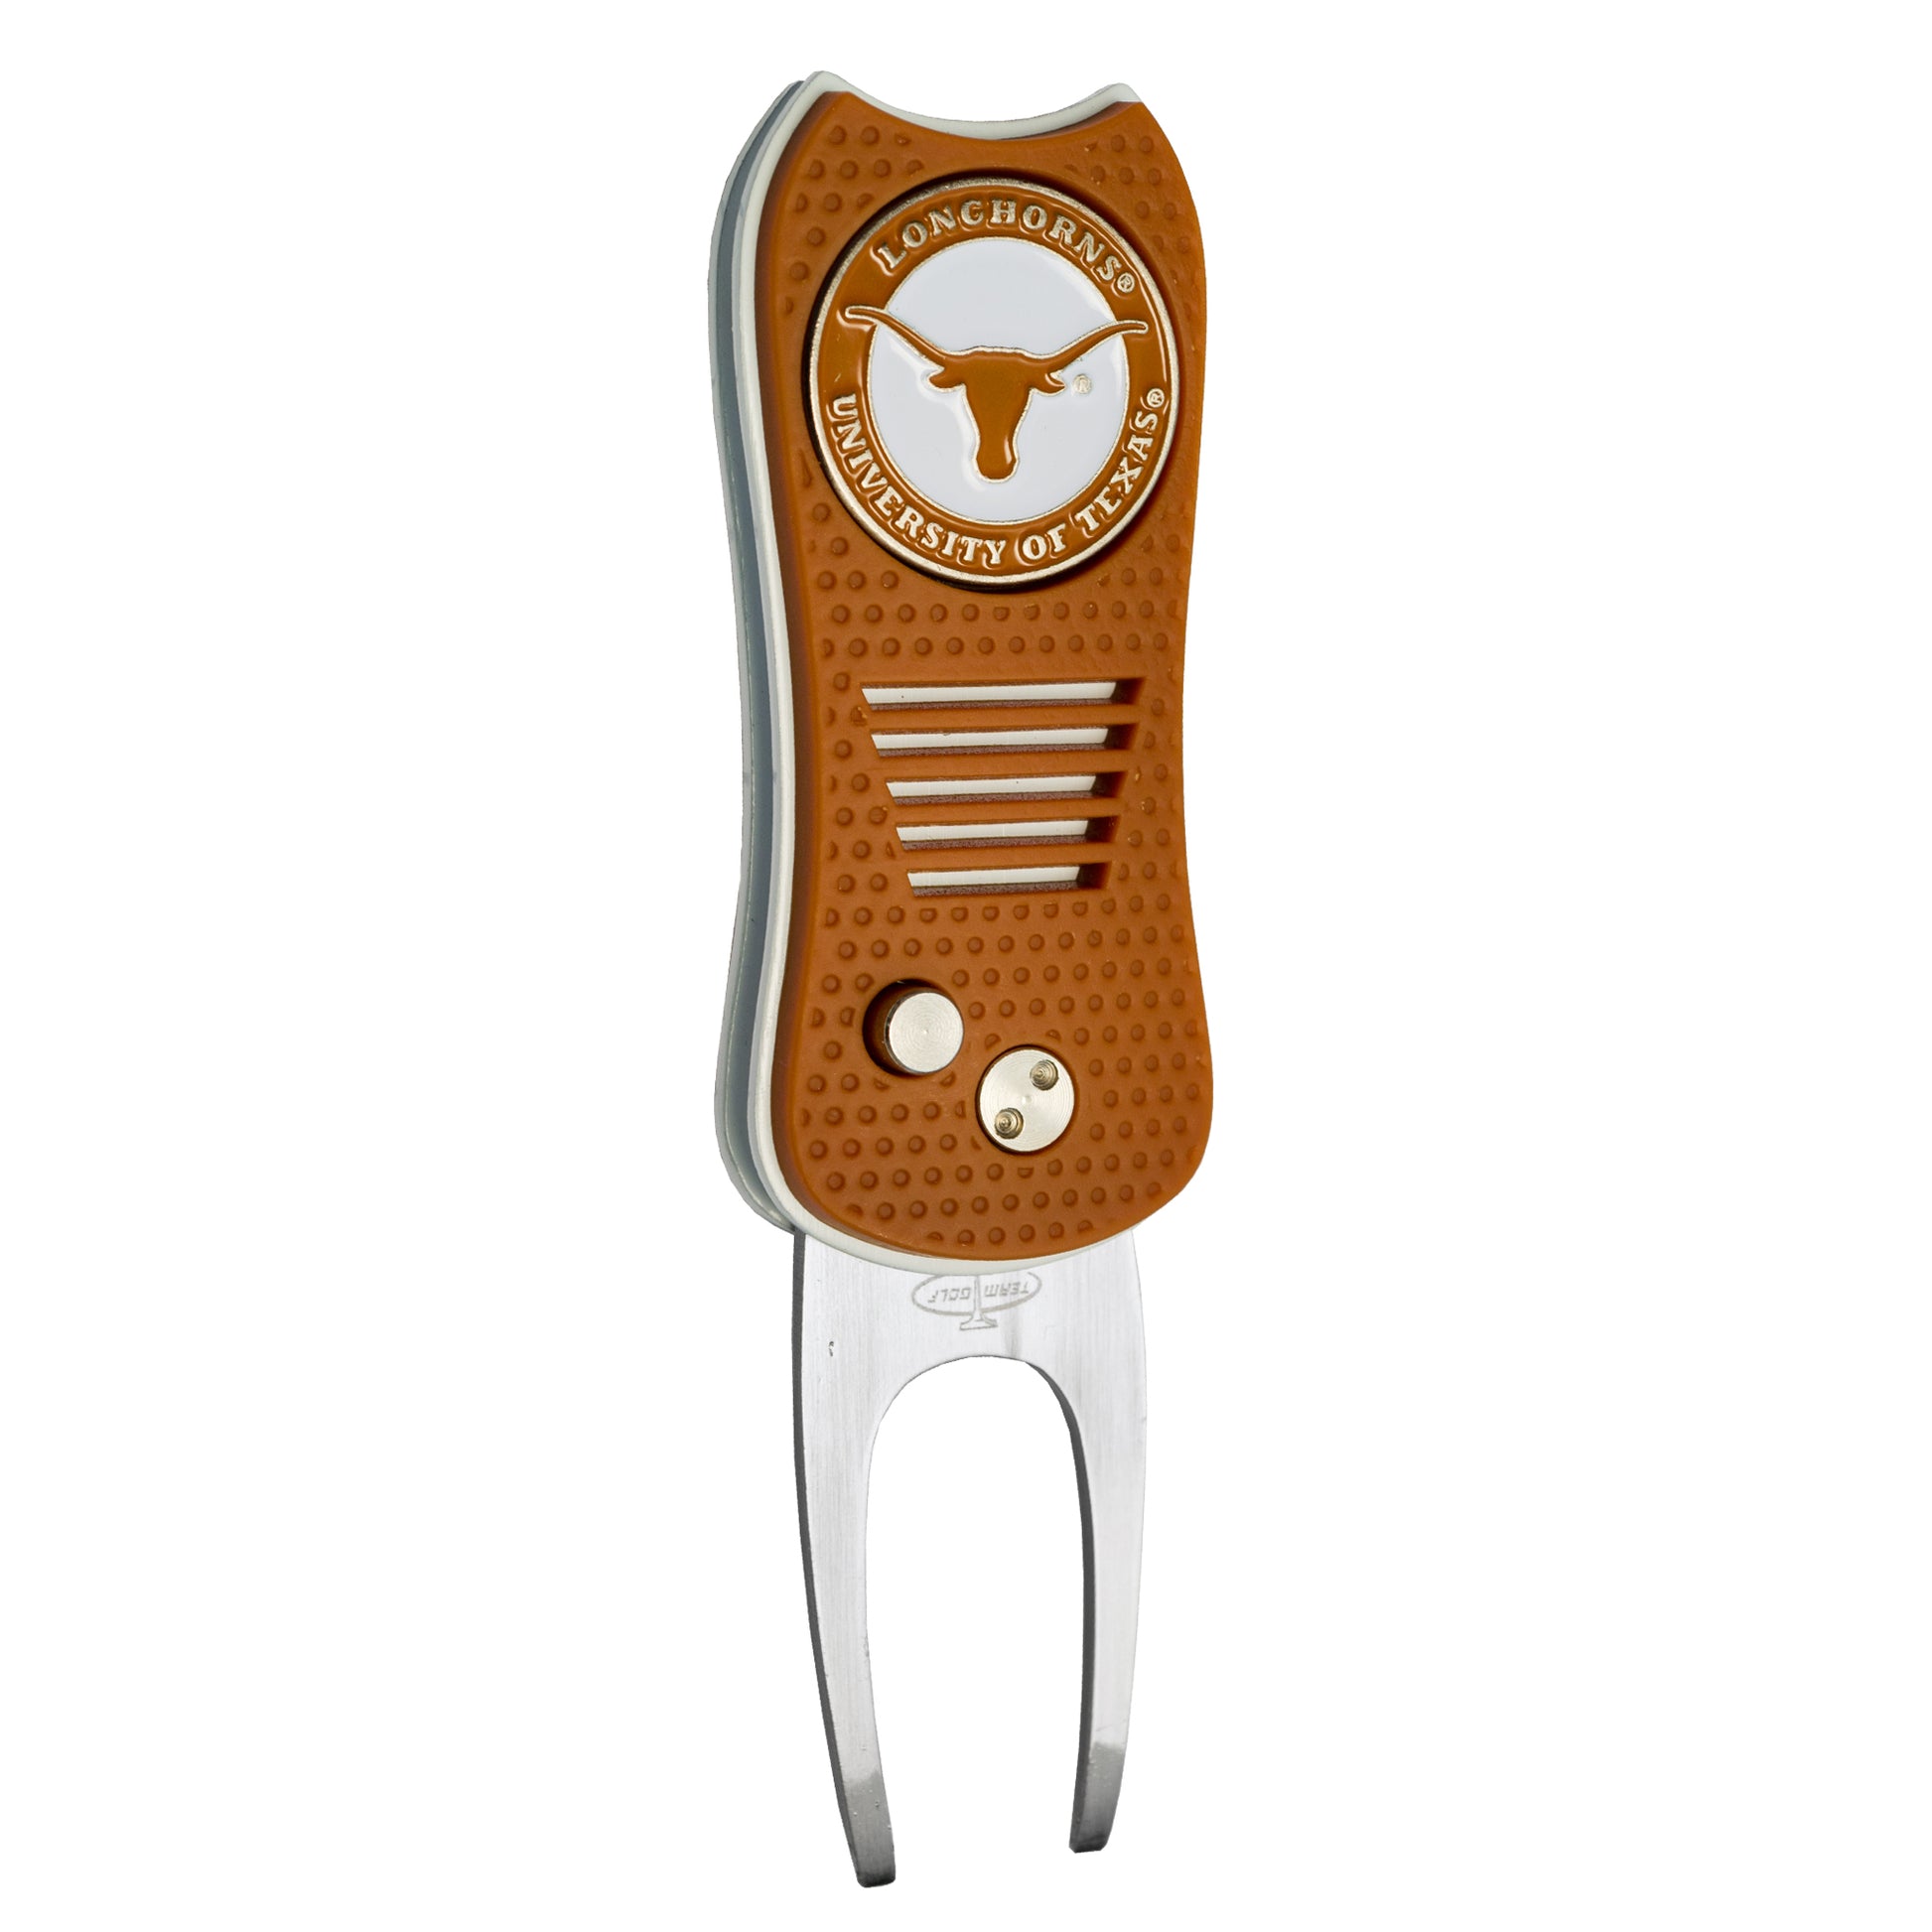 NCAA Switchblade Divot Repair Tool - Texas Longhorns